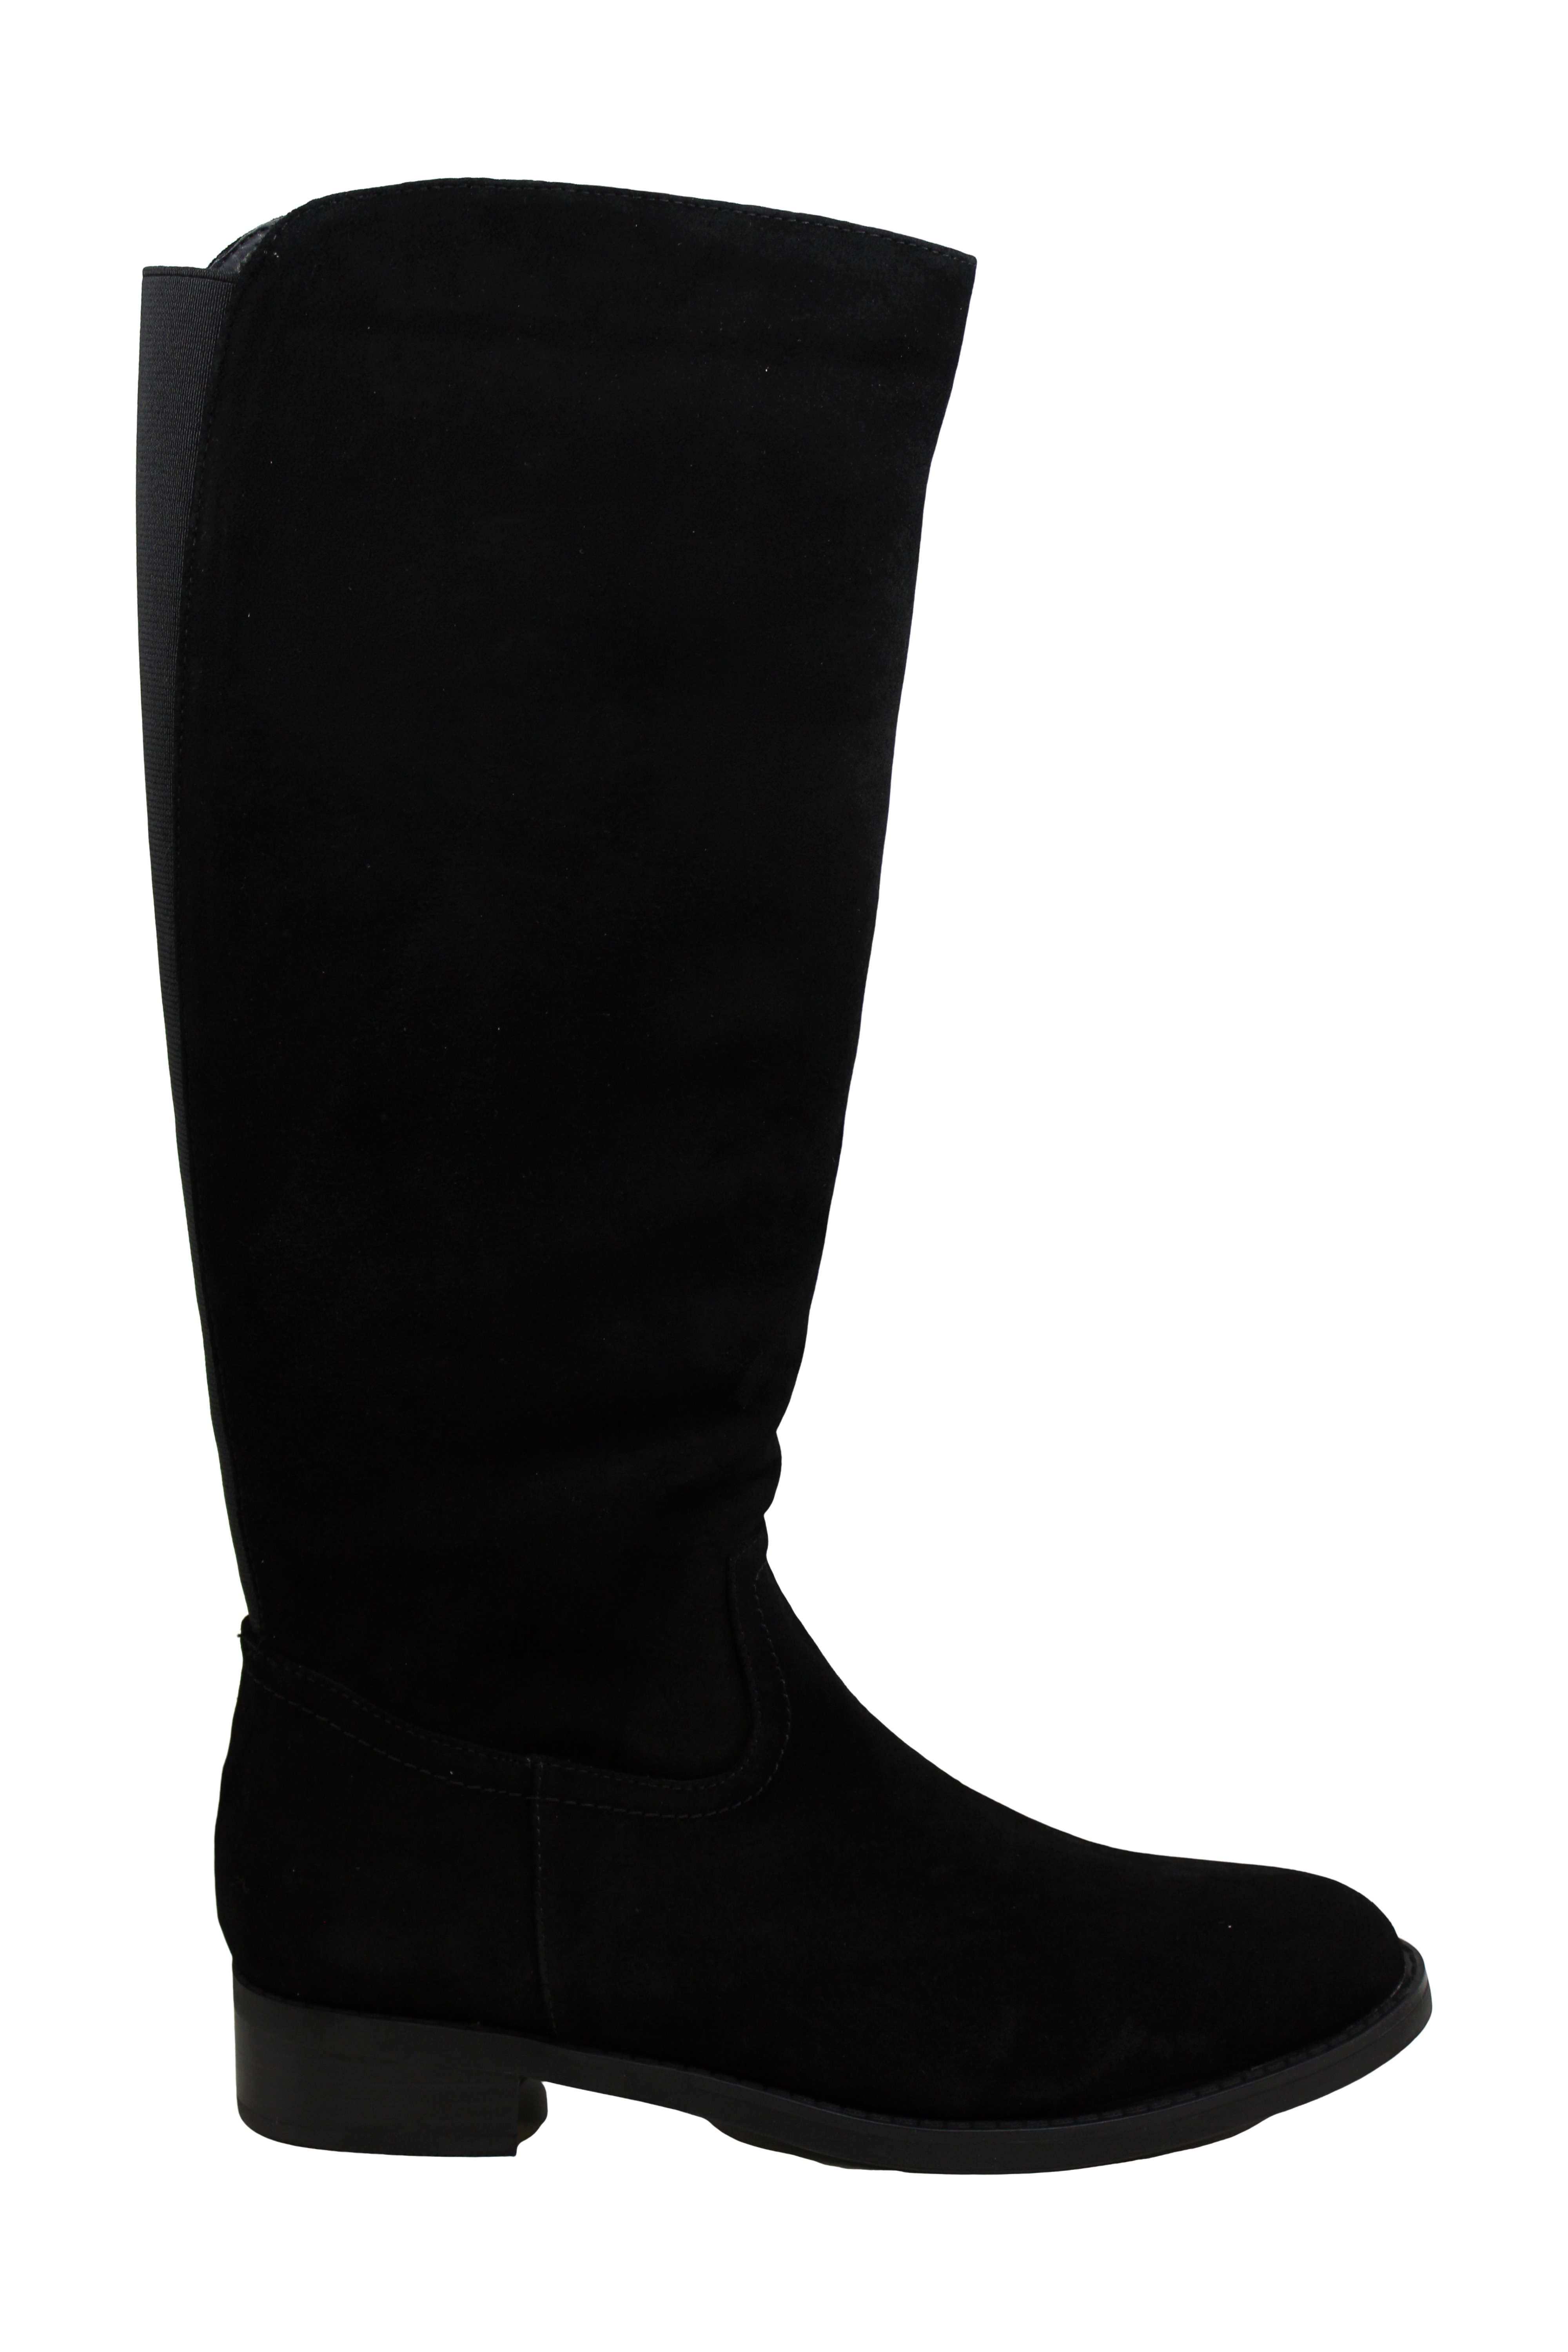 Aqua College Womens Elsa Round Toe Knee High Riding Boots, Black, Size ...